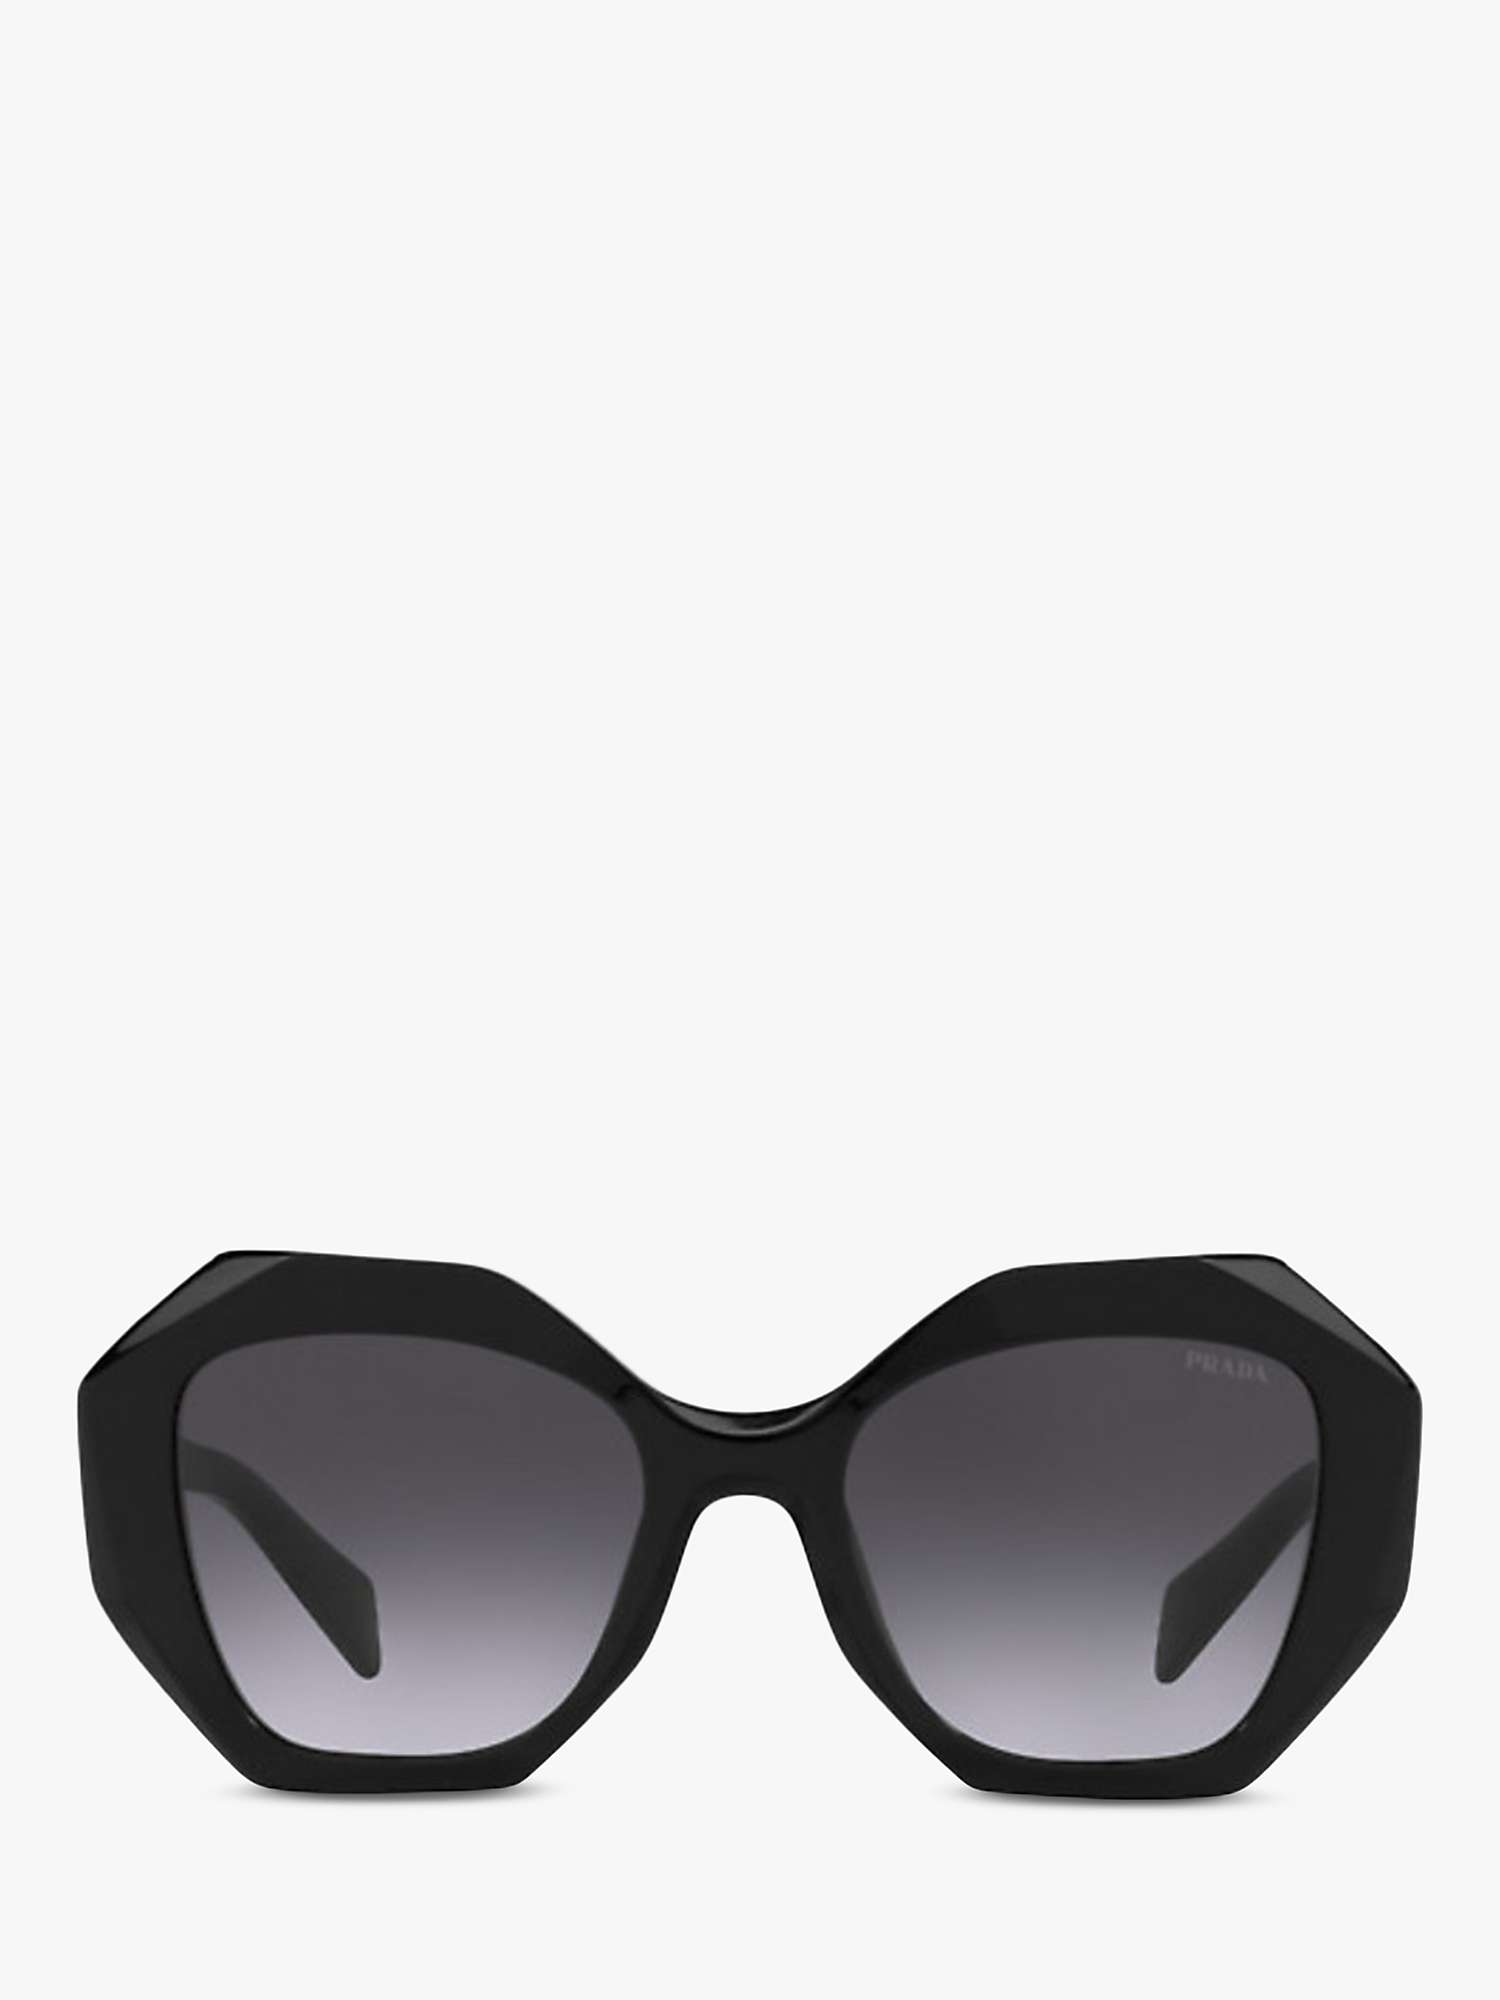 Prada PR 16WS Women's Irregular Shaped Sunglasses, Black/Black Gradient ...